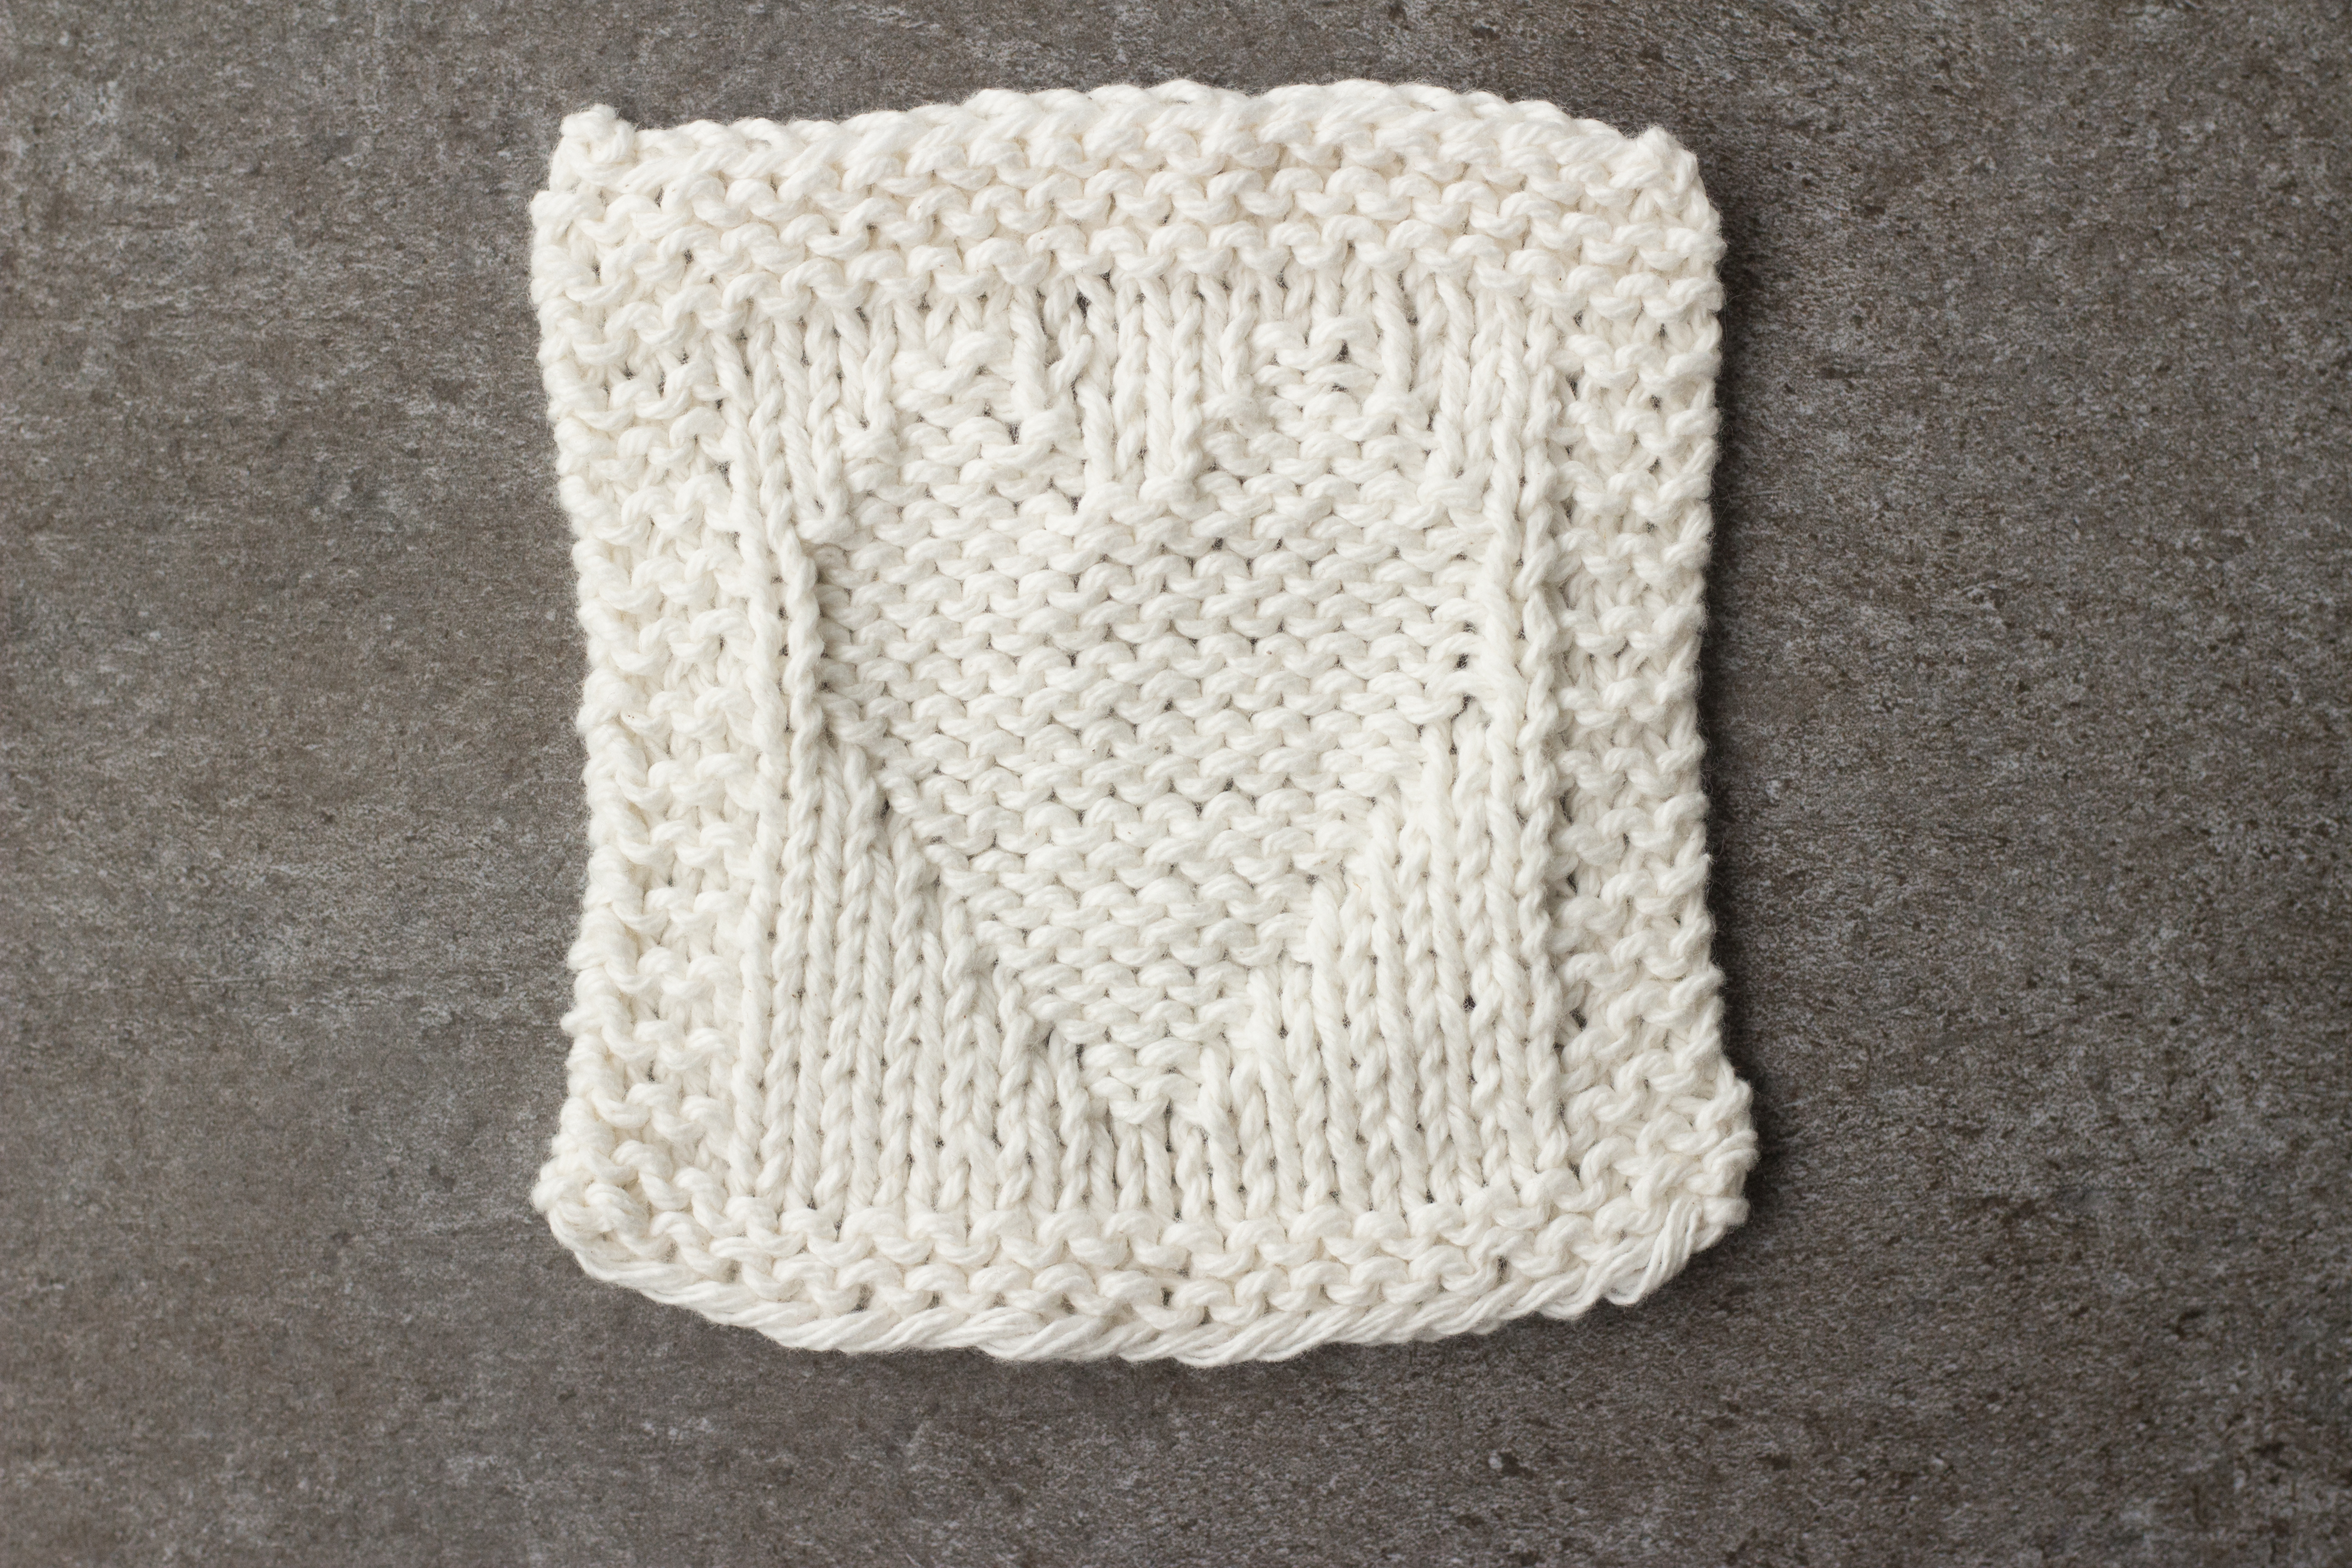 Heart Shaped Dishcloth Knitting Pattern Reverse Stockinette Stitch How To Design Reversible Knitting